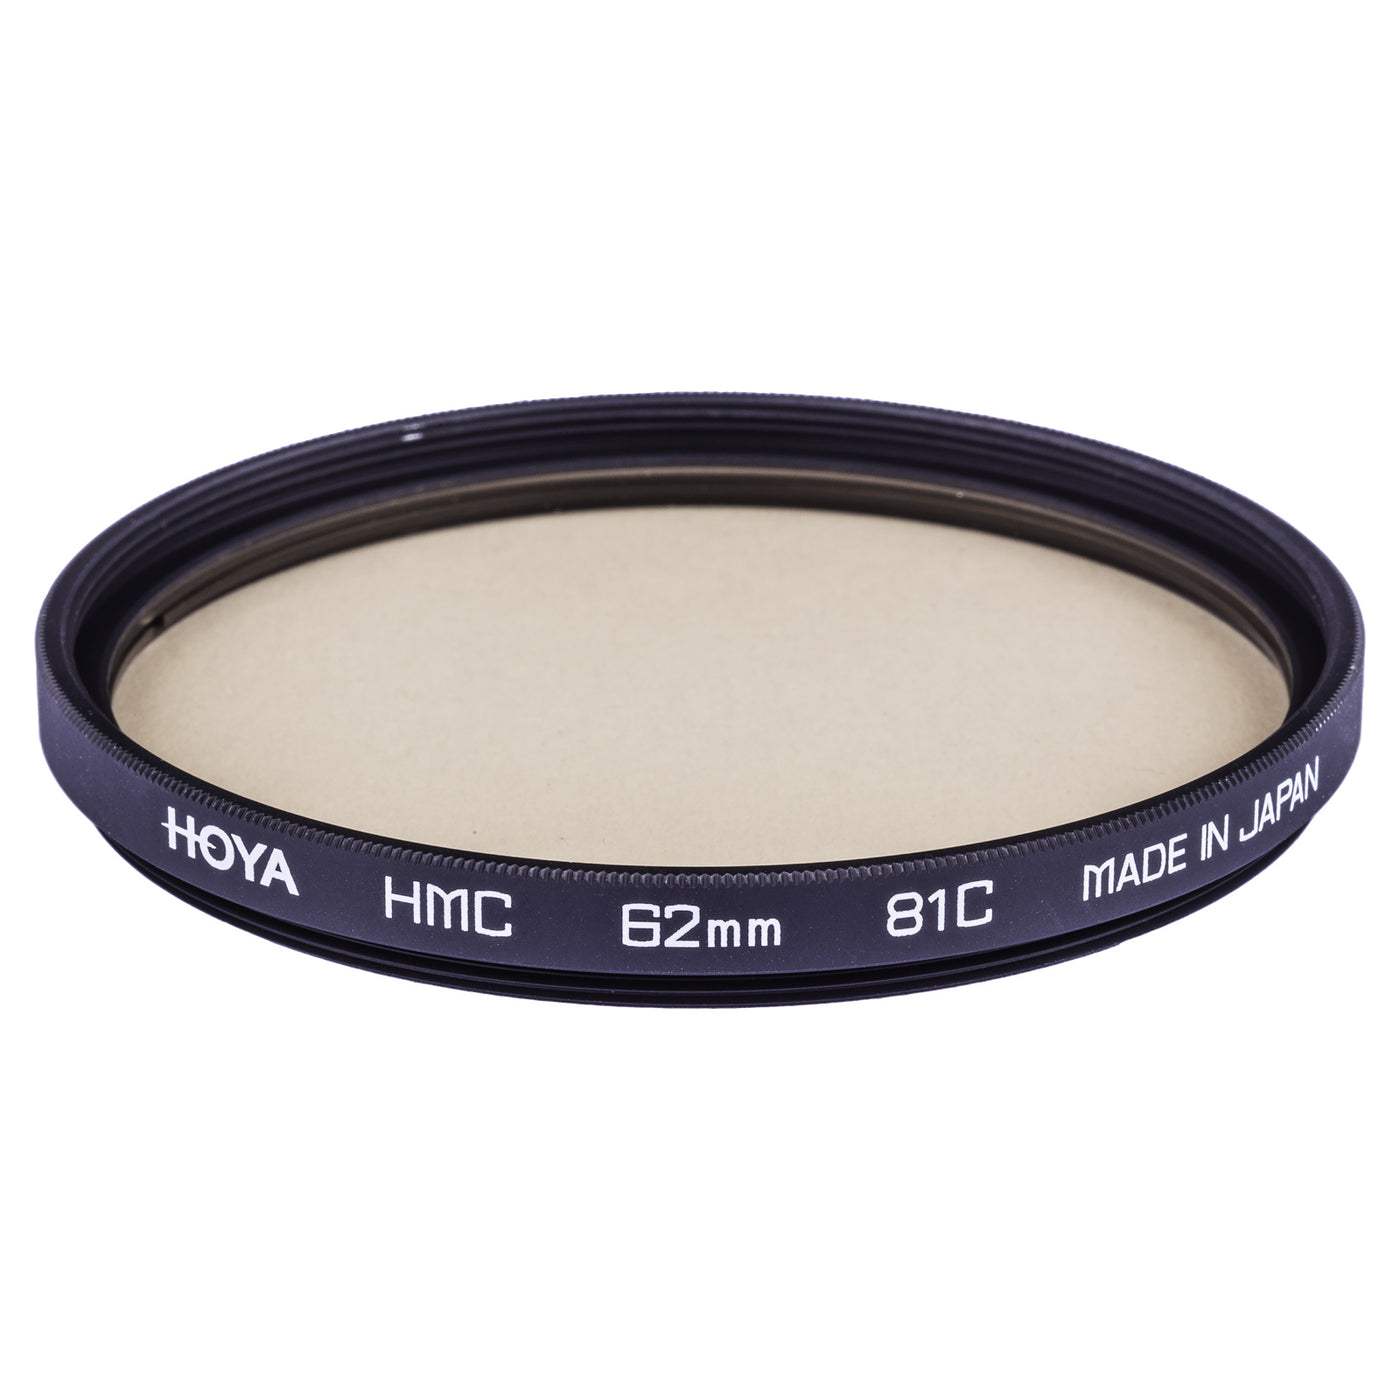 Hoya A 81 C Filter